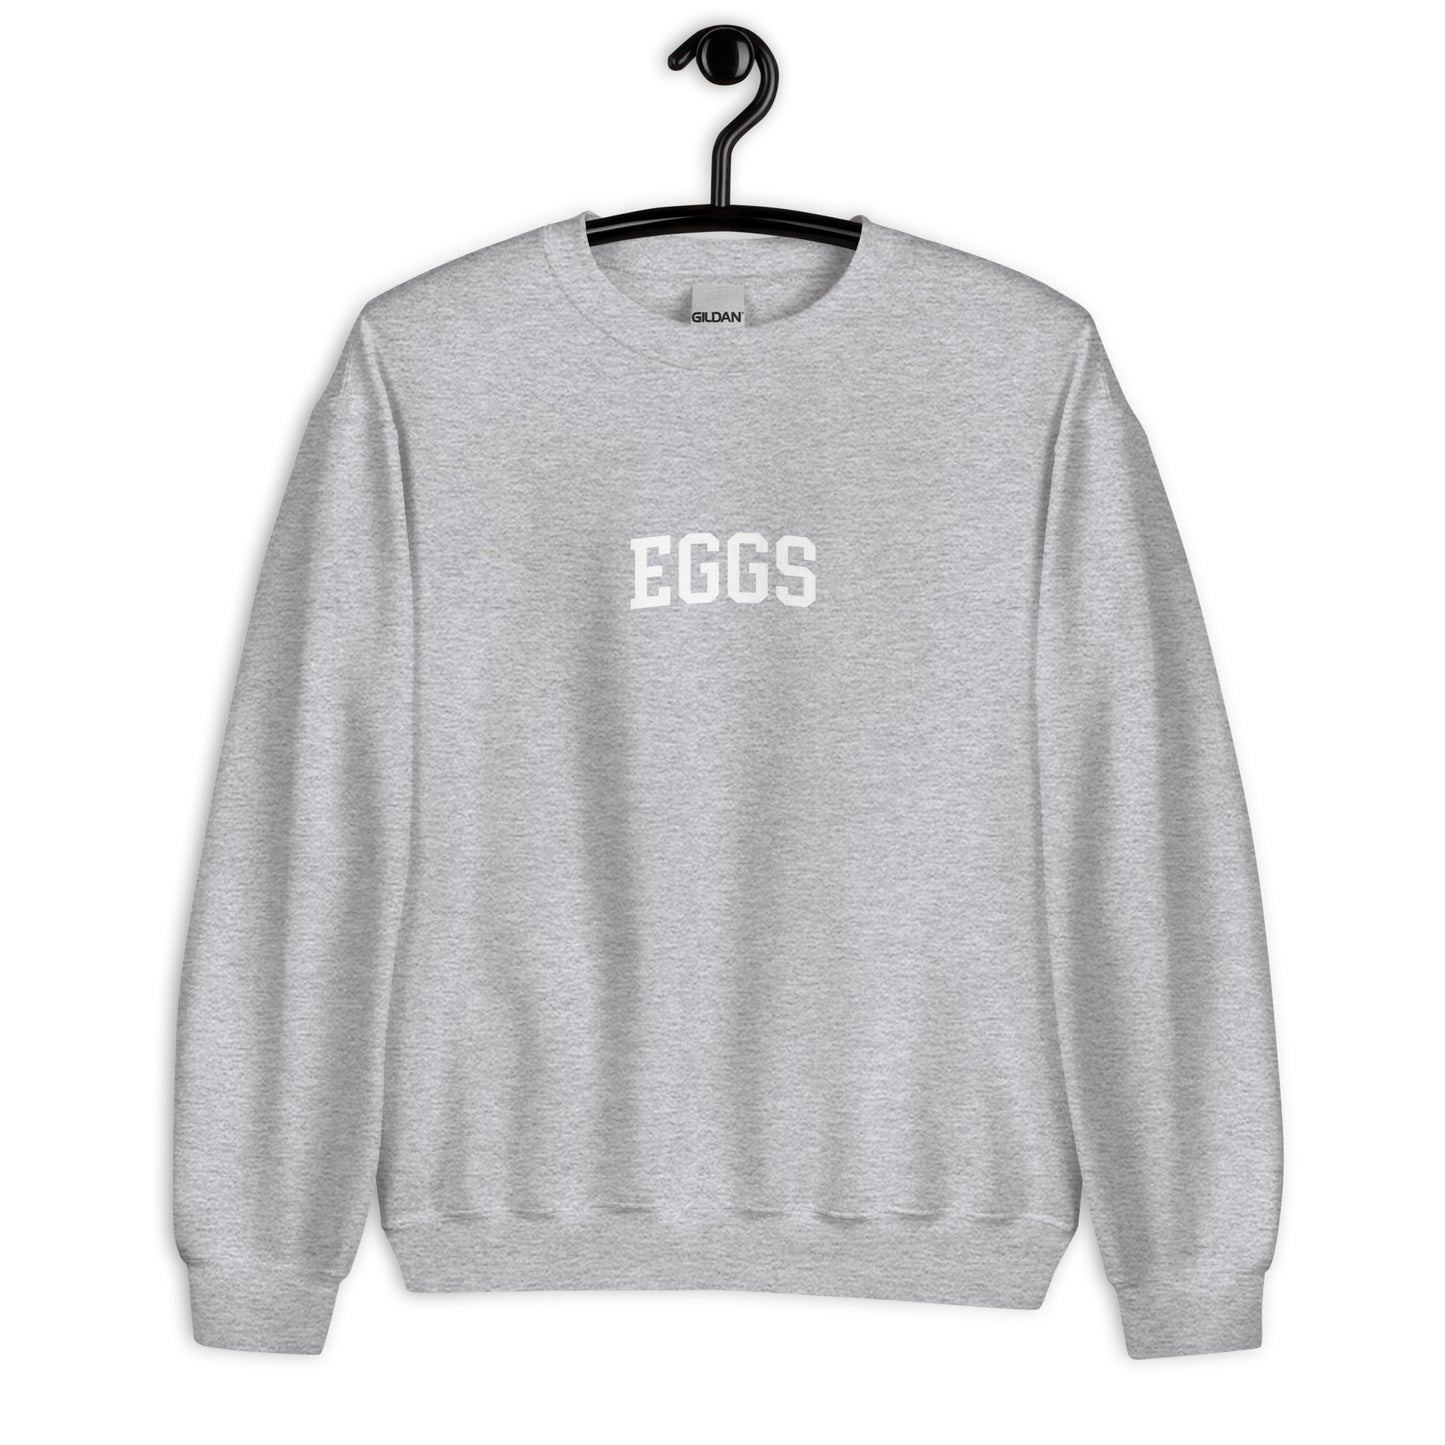 Eggs Sweatshirt - Arched Font